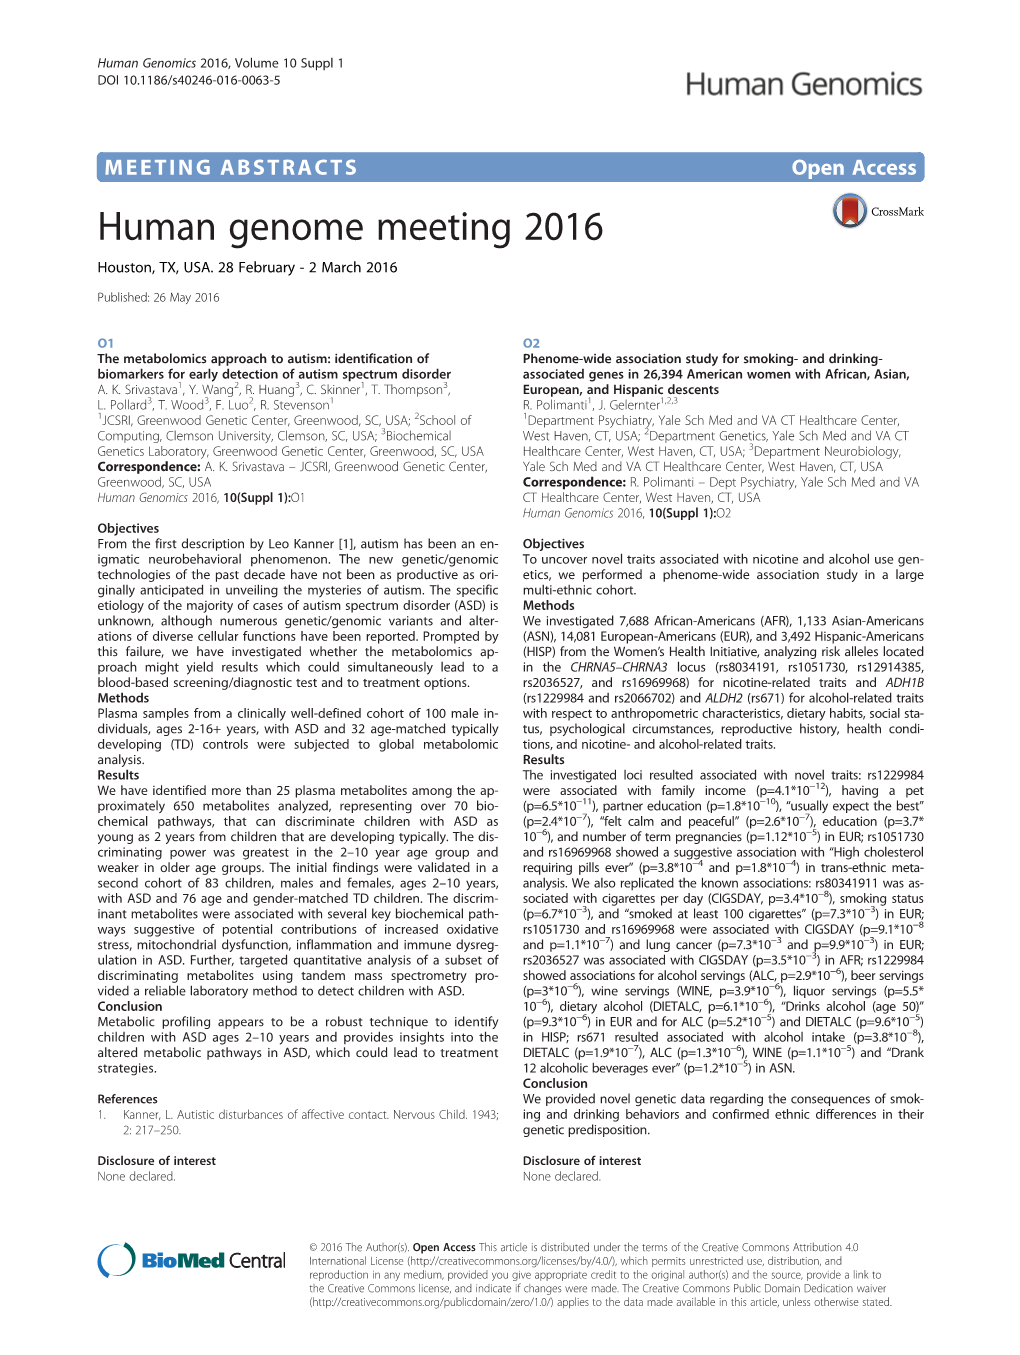 Human Genome Meeting 2016 Houston, TX, USA